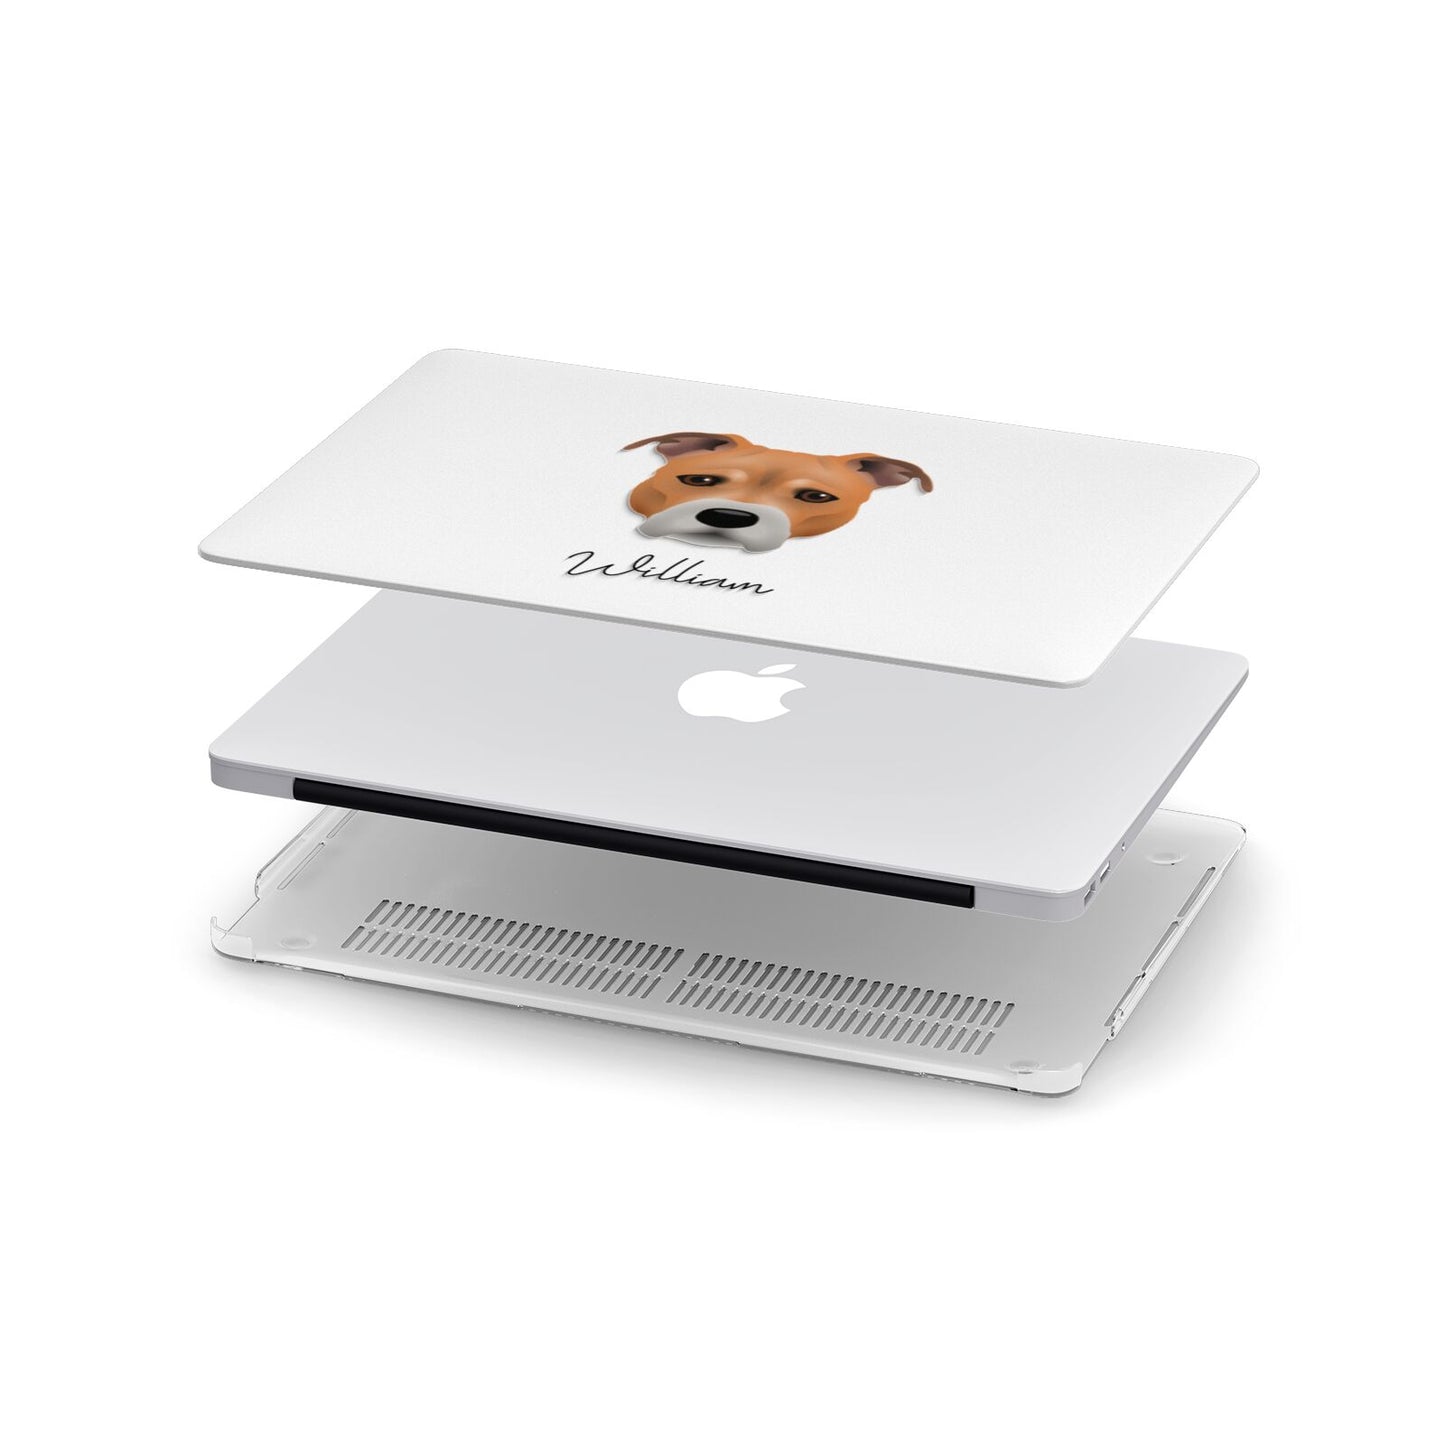 Staffordshire Bull Terrier Personalised Apple MacBook Case in Detail